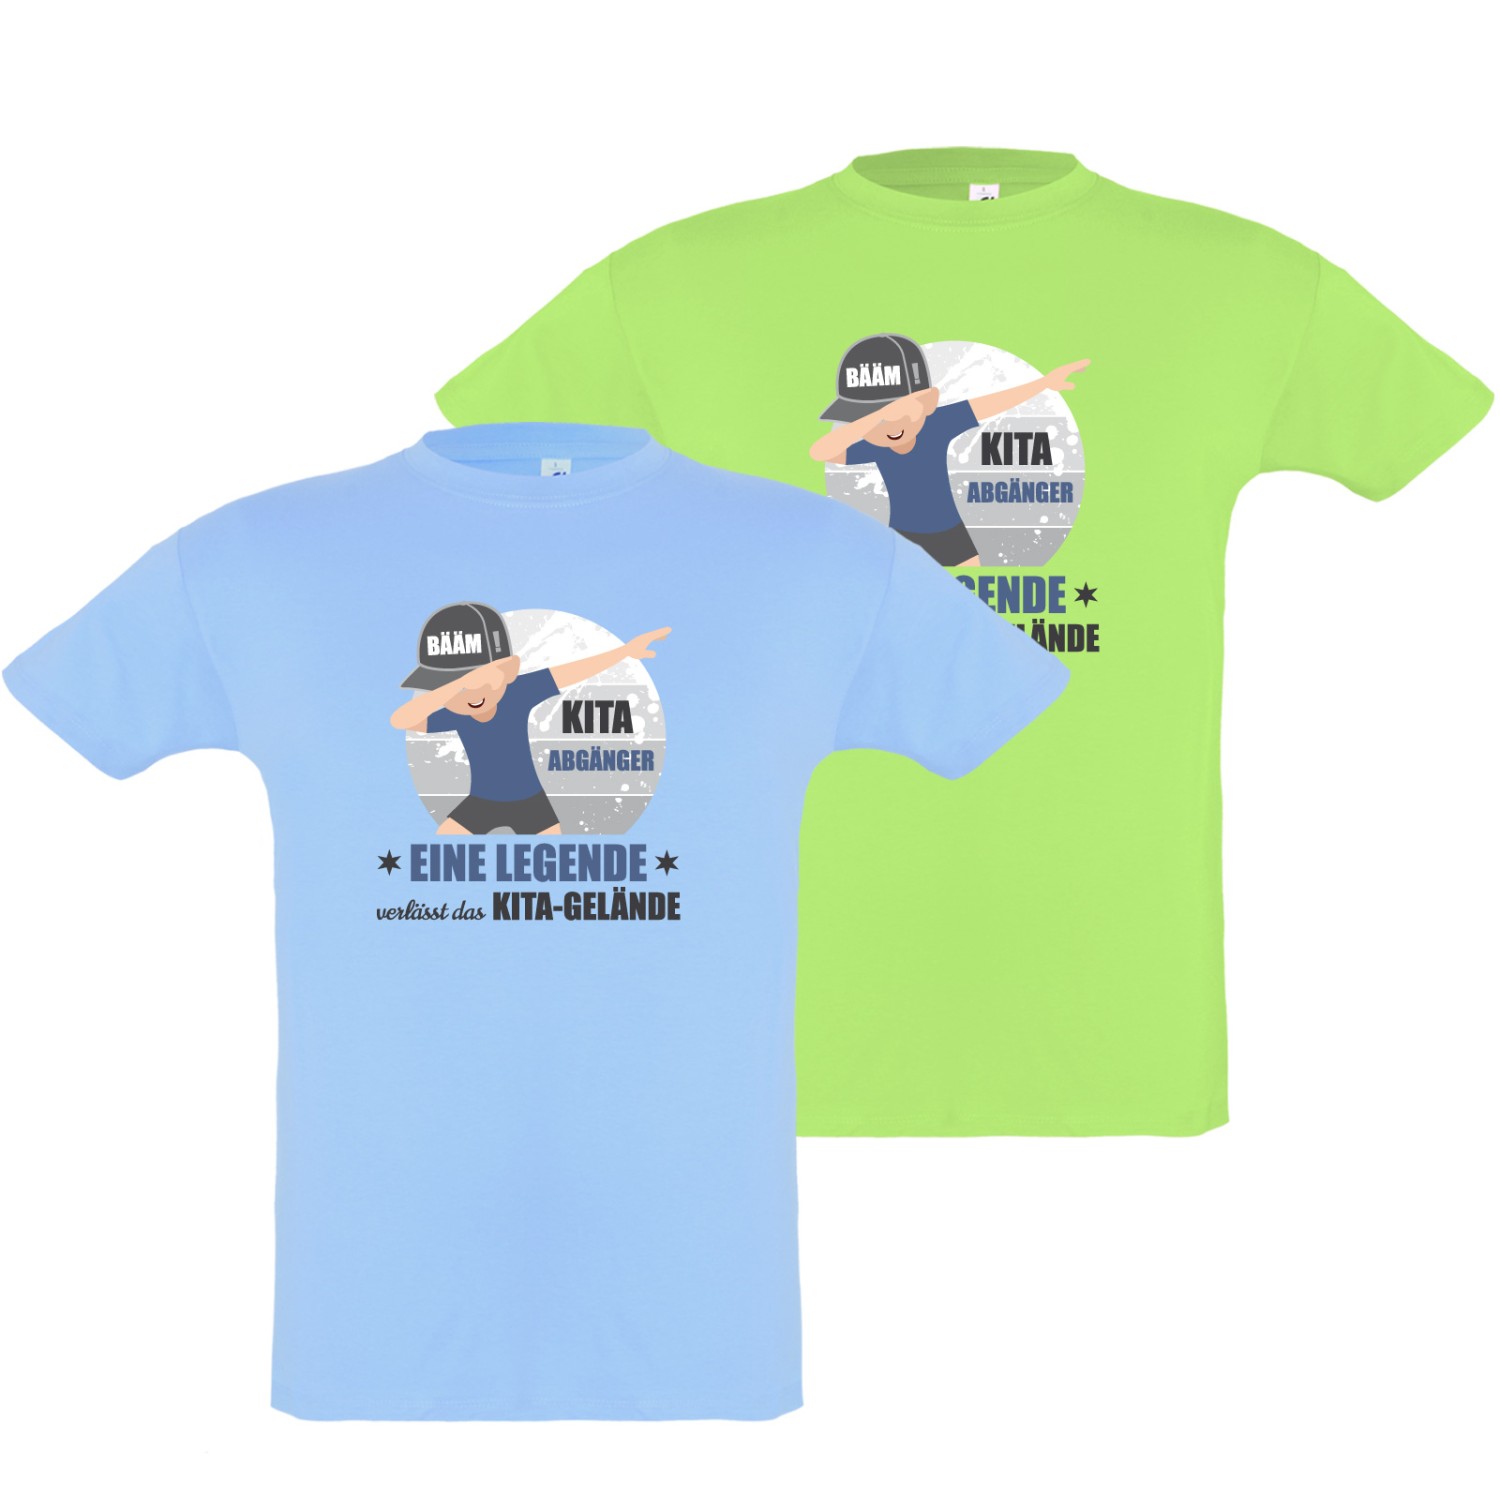 1. Foto T-Shirt Kita Jungs Abgänger Legende Shirt Kindegarten (Farbe: limette Größe: 106/116)